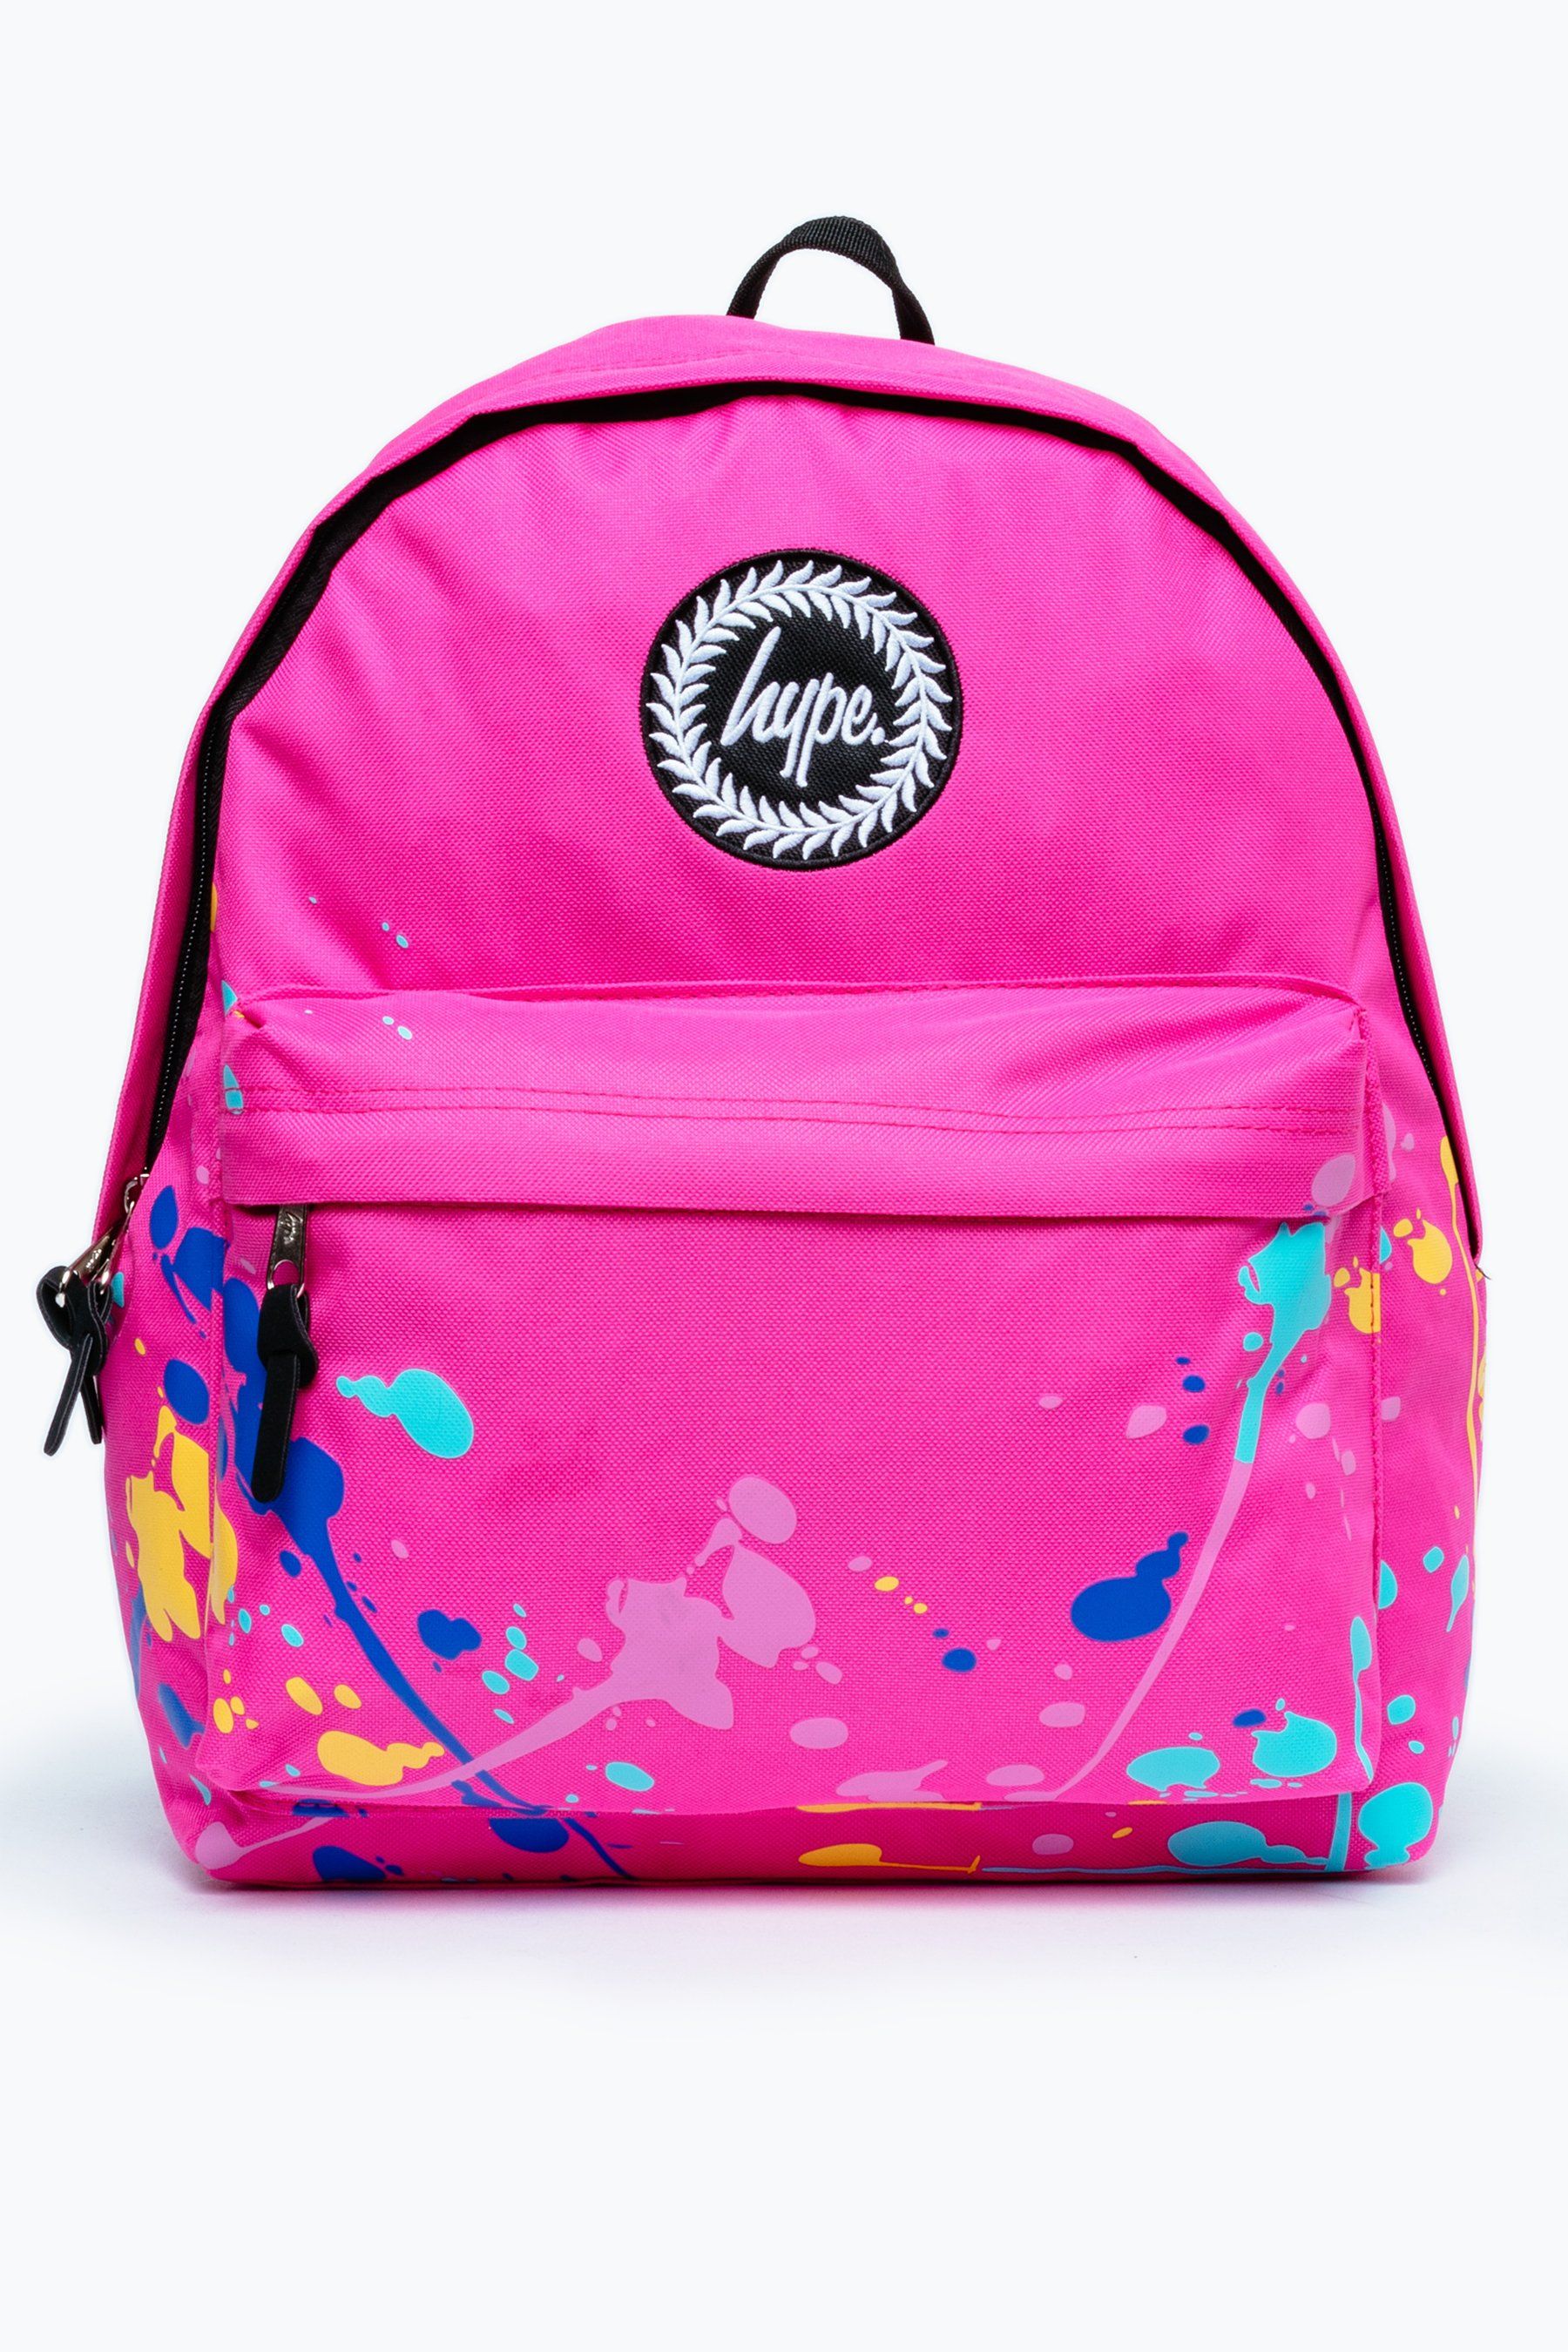 Hype Pink Paint Splatter Backpack